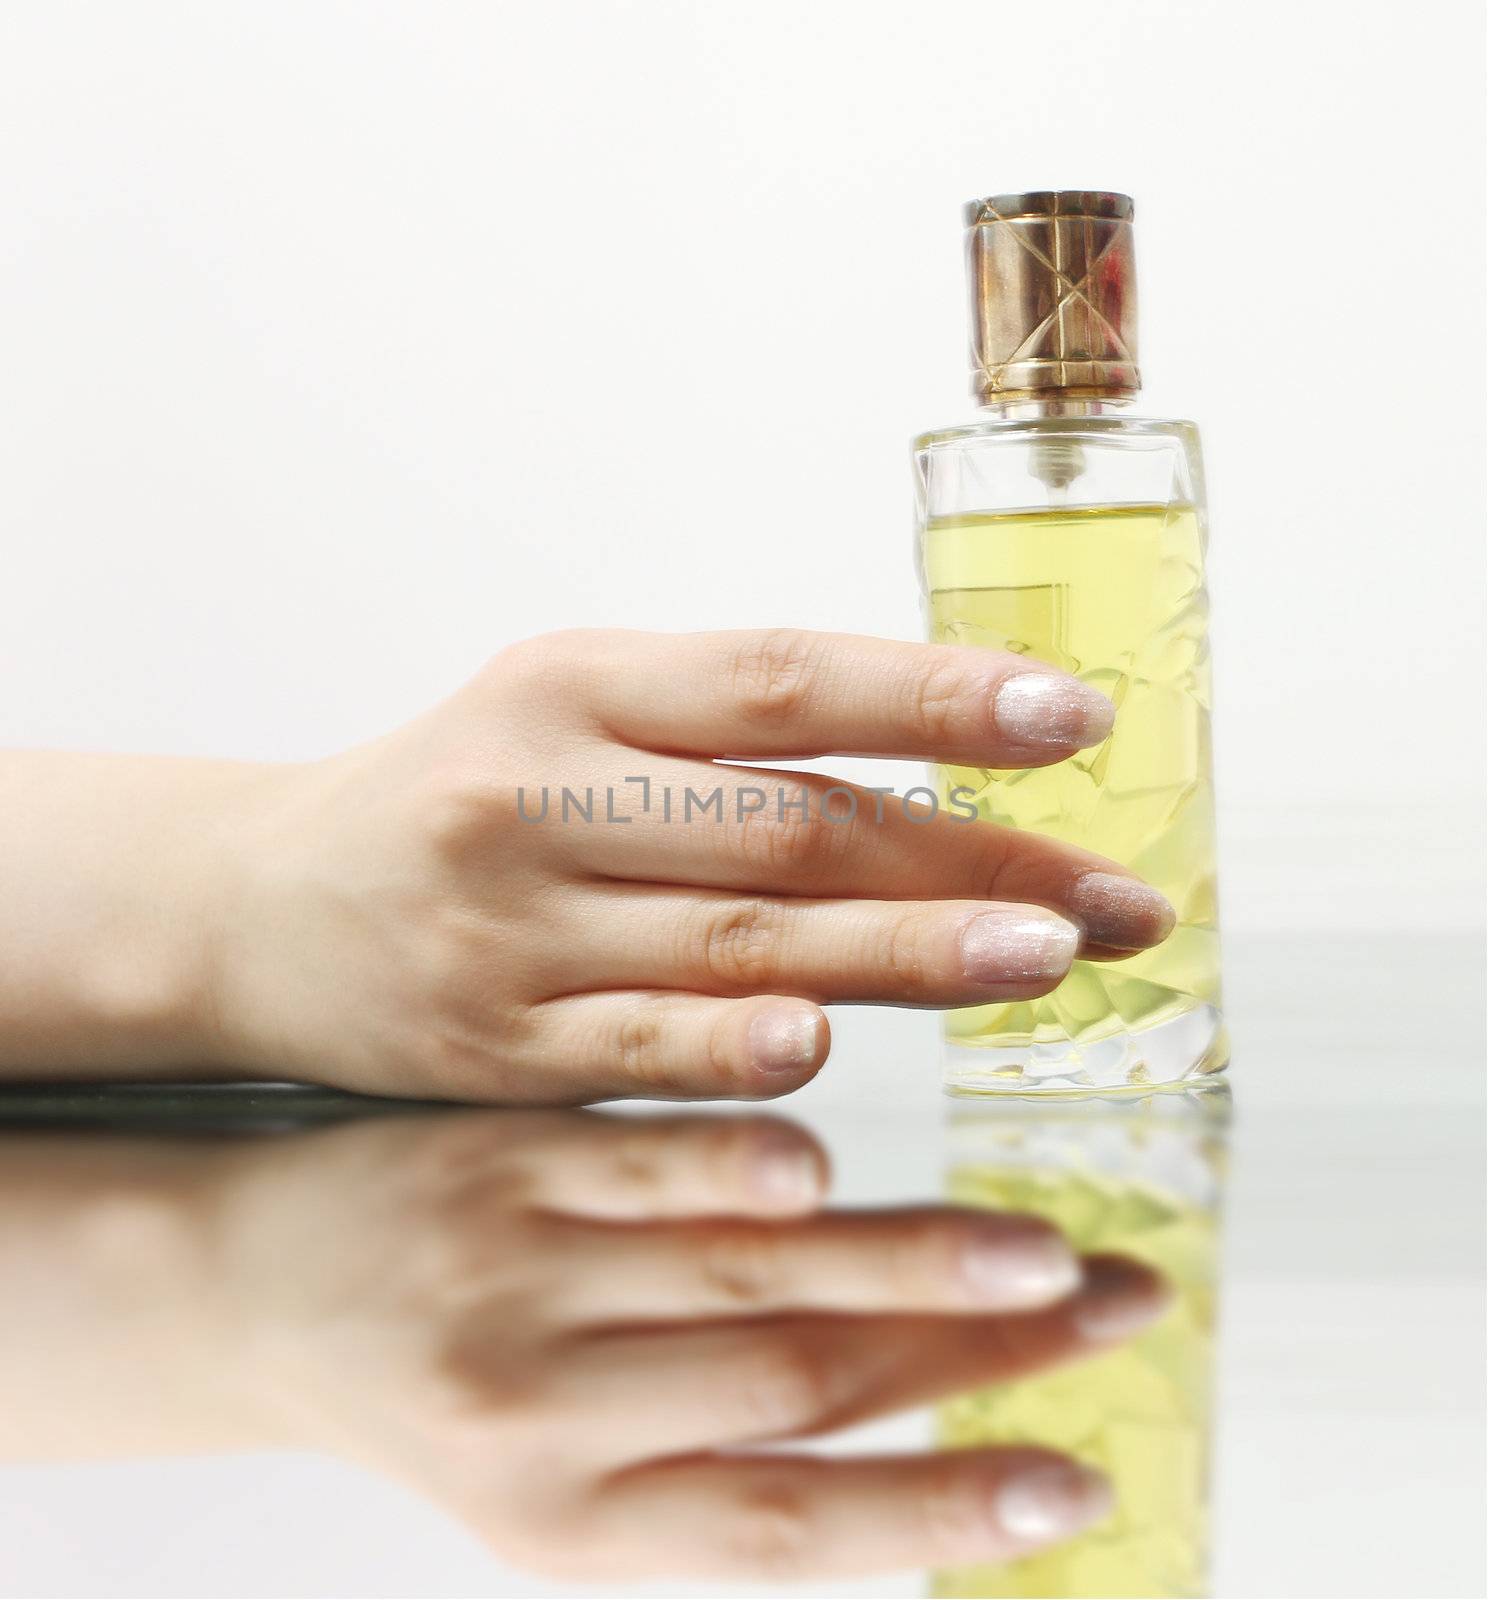 A hand holding a bottle of perfume, feeling elegant, luxury